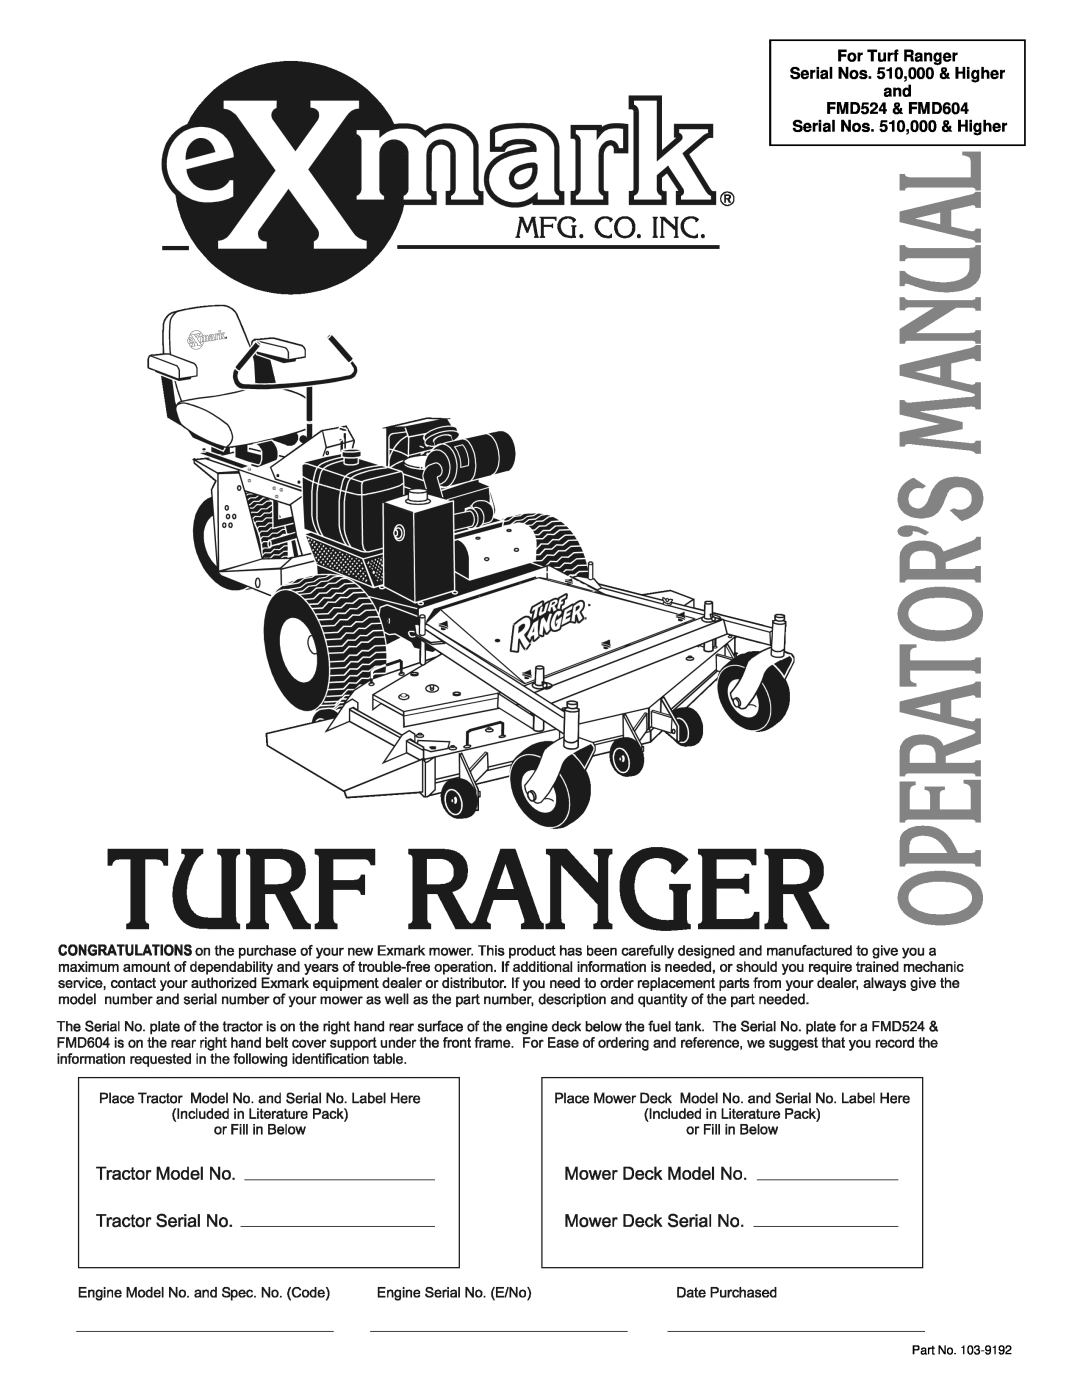 Exmark TR23KC manual For Turf Ranger Serial Nos. 510,000 & Higher and, FMD524 & FMD604 Serial Nos. 510,000 & Higher 